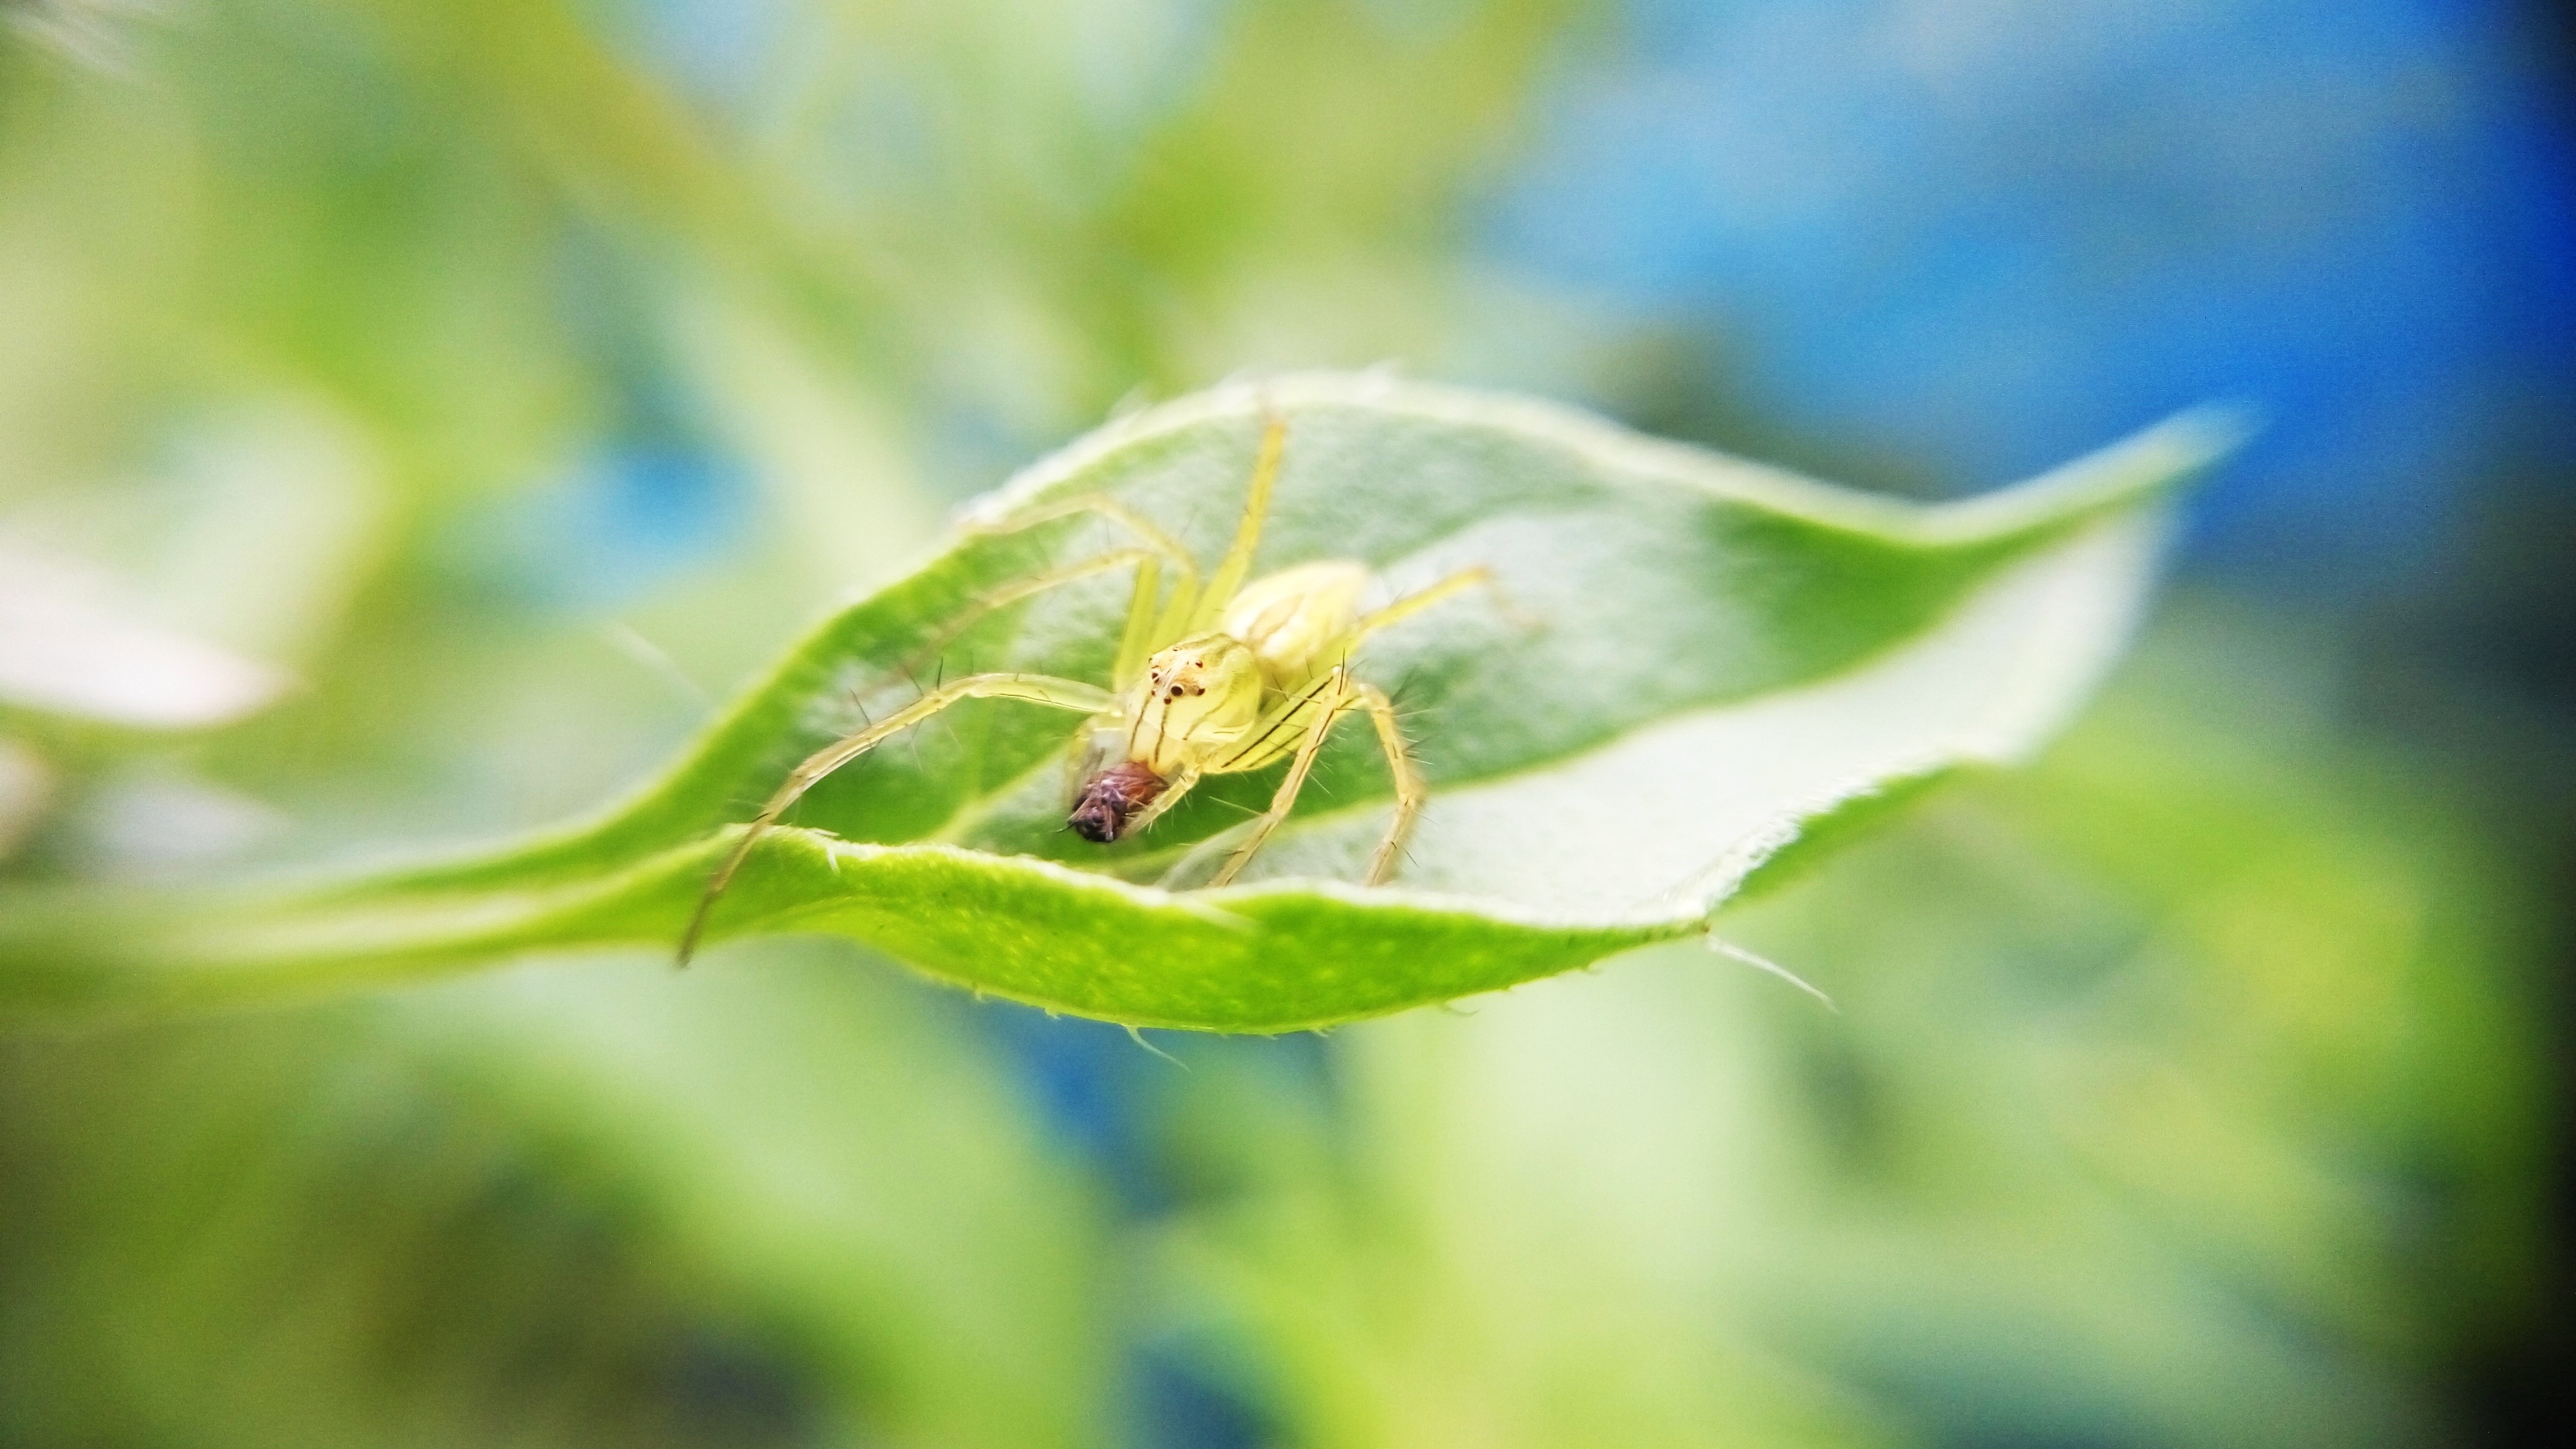 Light spider on a green leaf close-up free image download